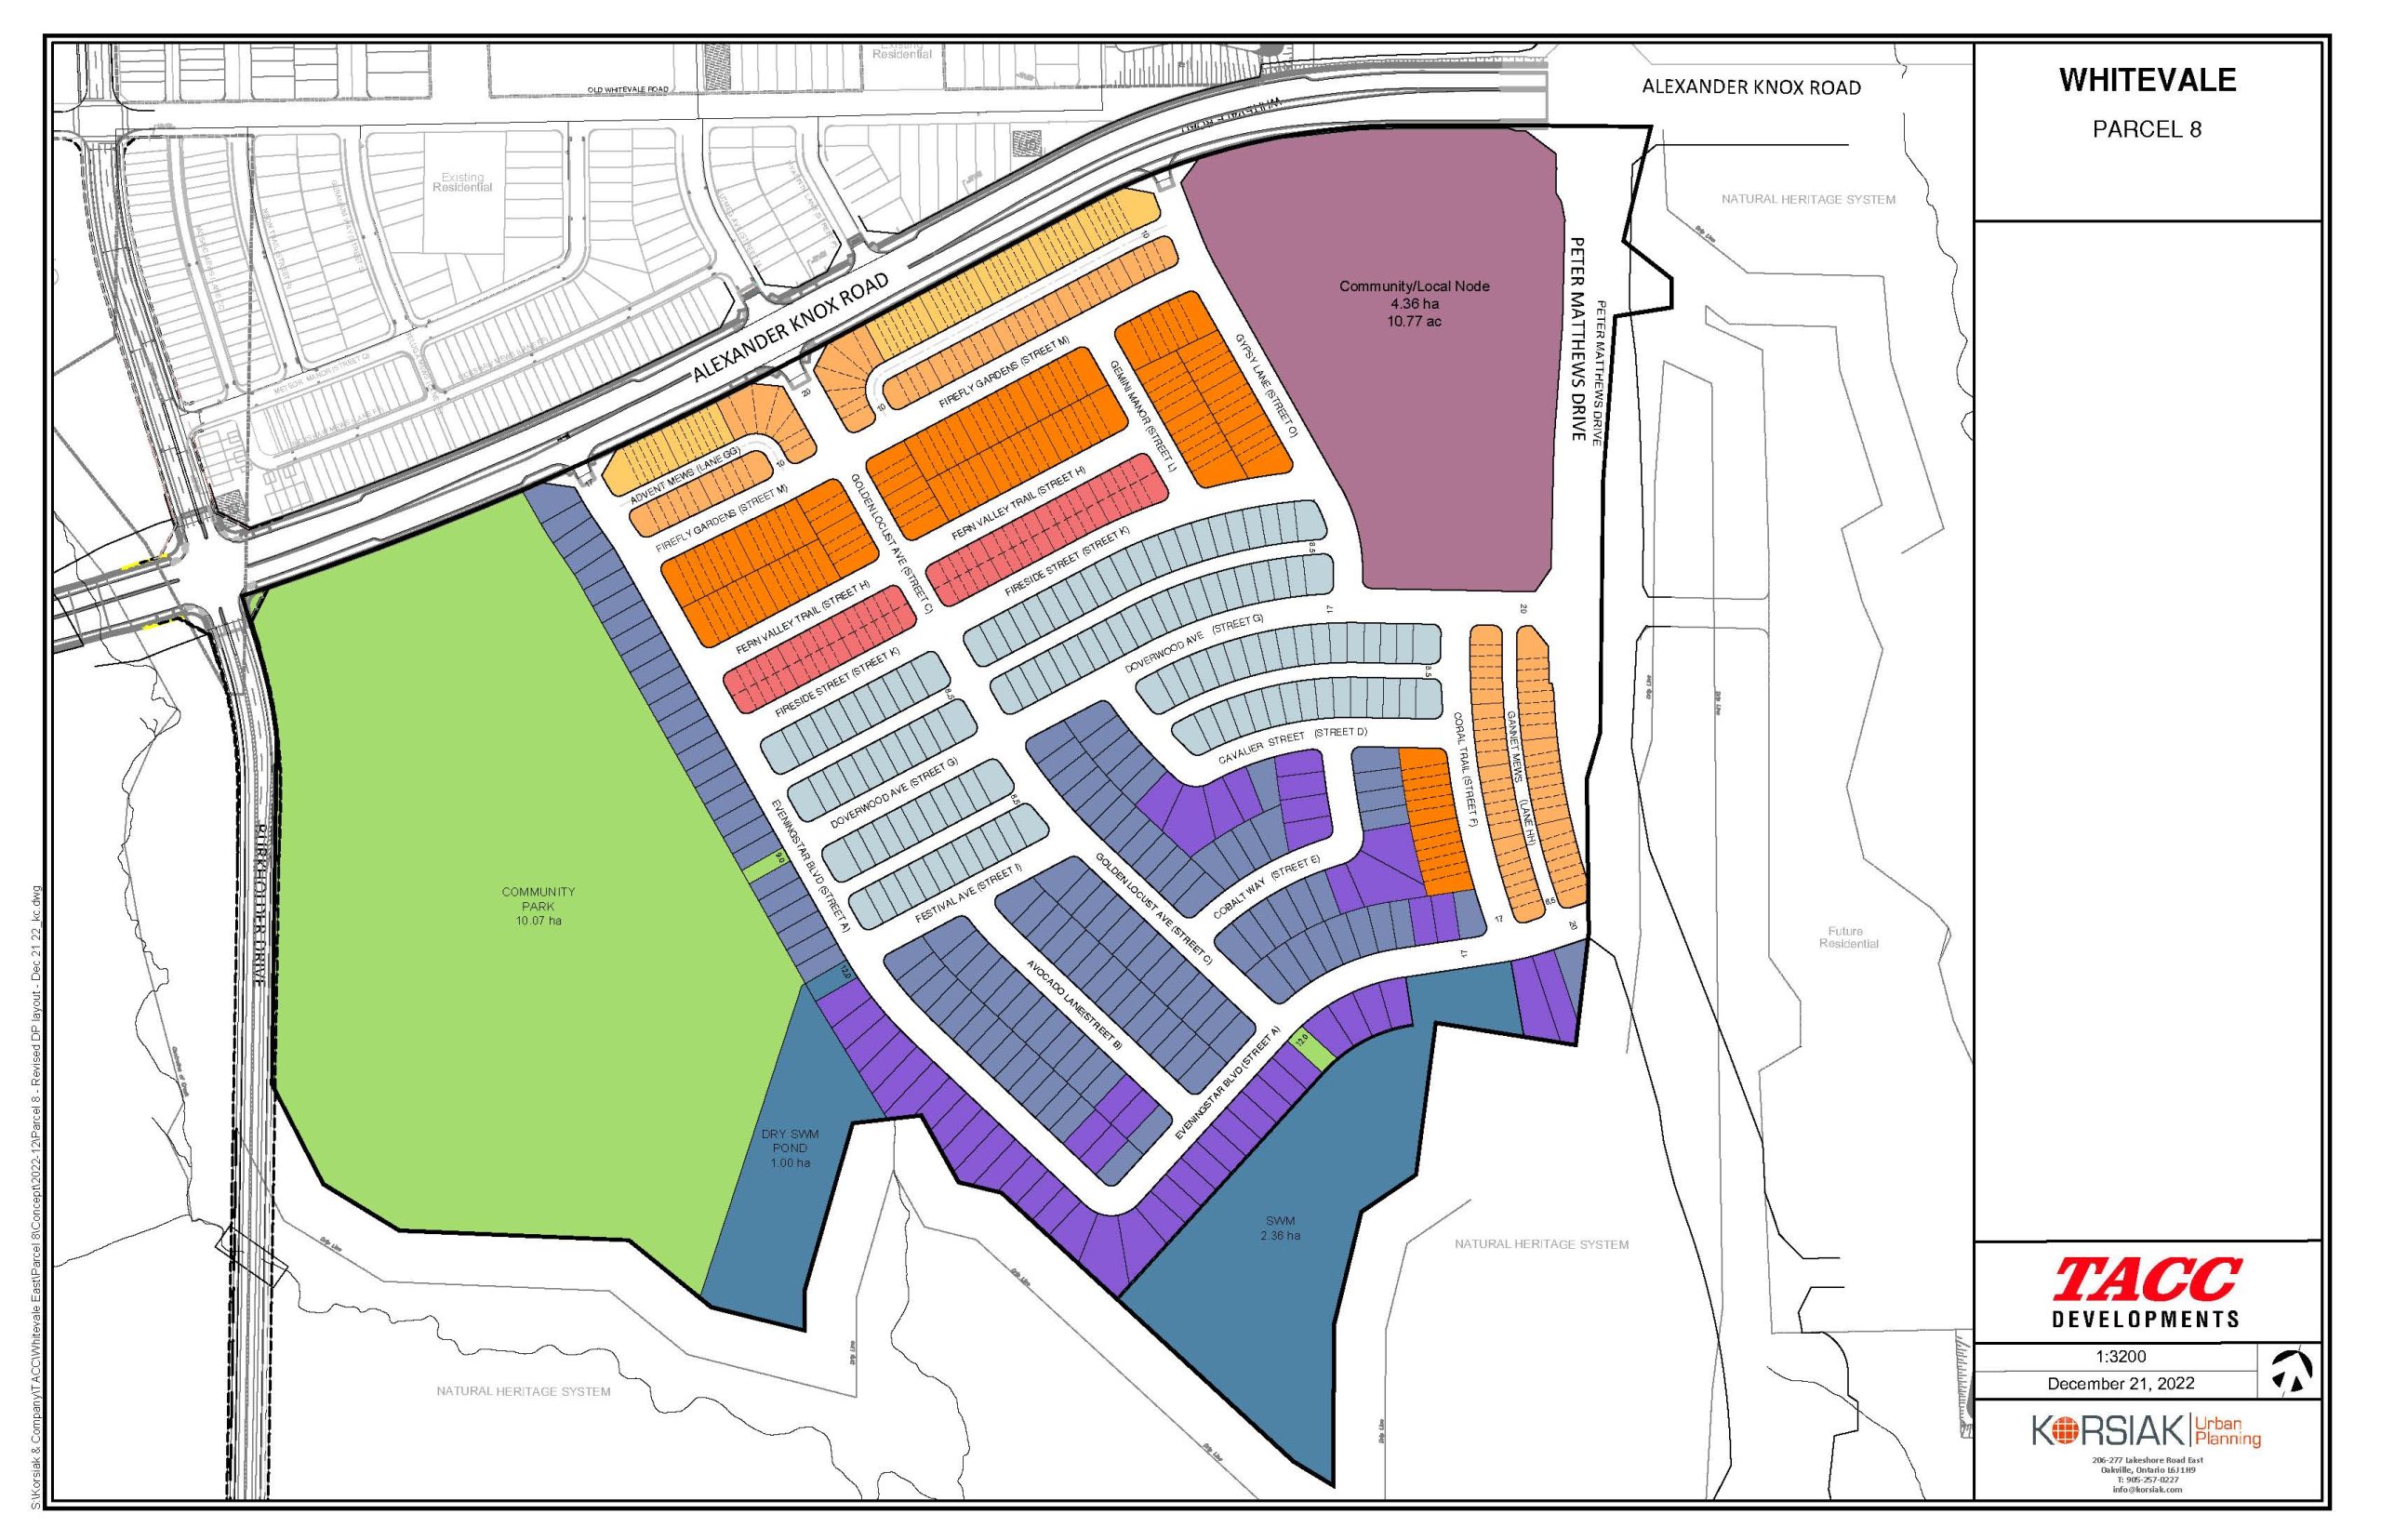 Korsiak Urban Planning - Pickering Portfolio - Alexander Knox Road, Greenfield Development - Pickering, Ontario